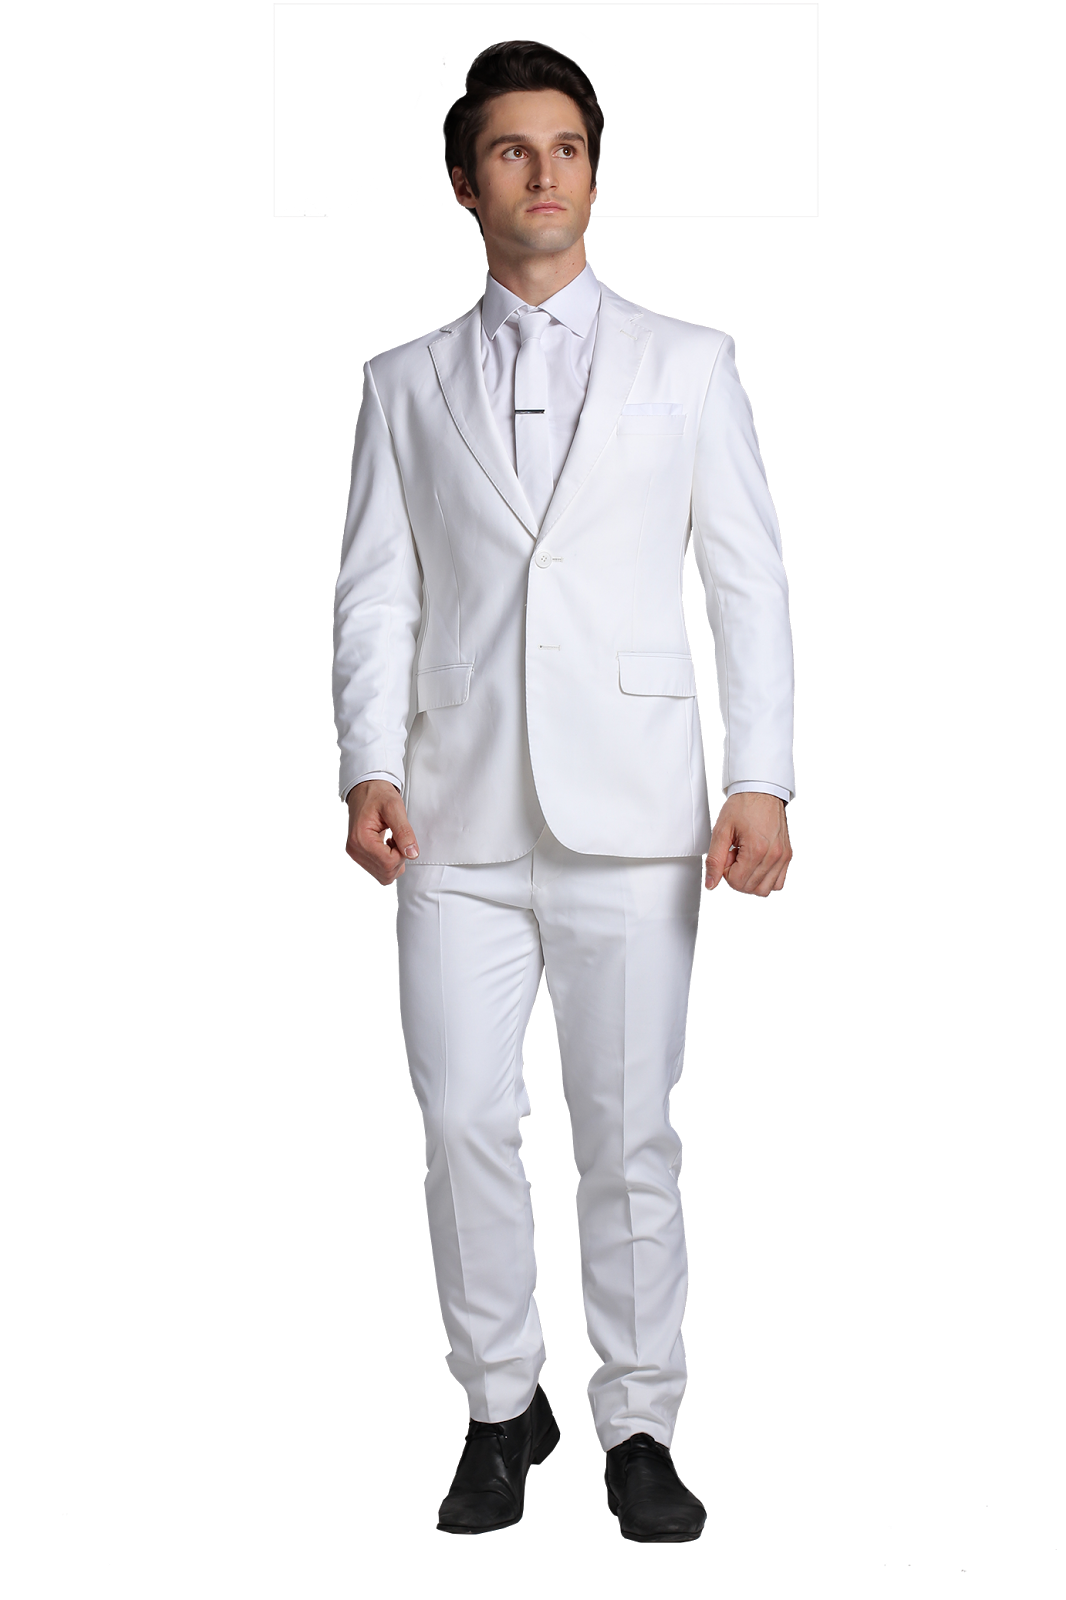 suit clipart corporate attire